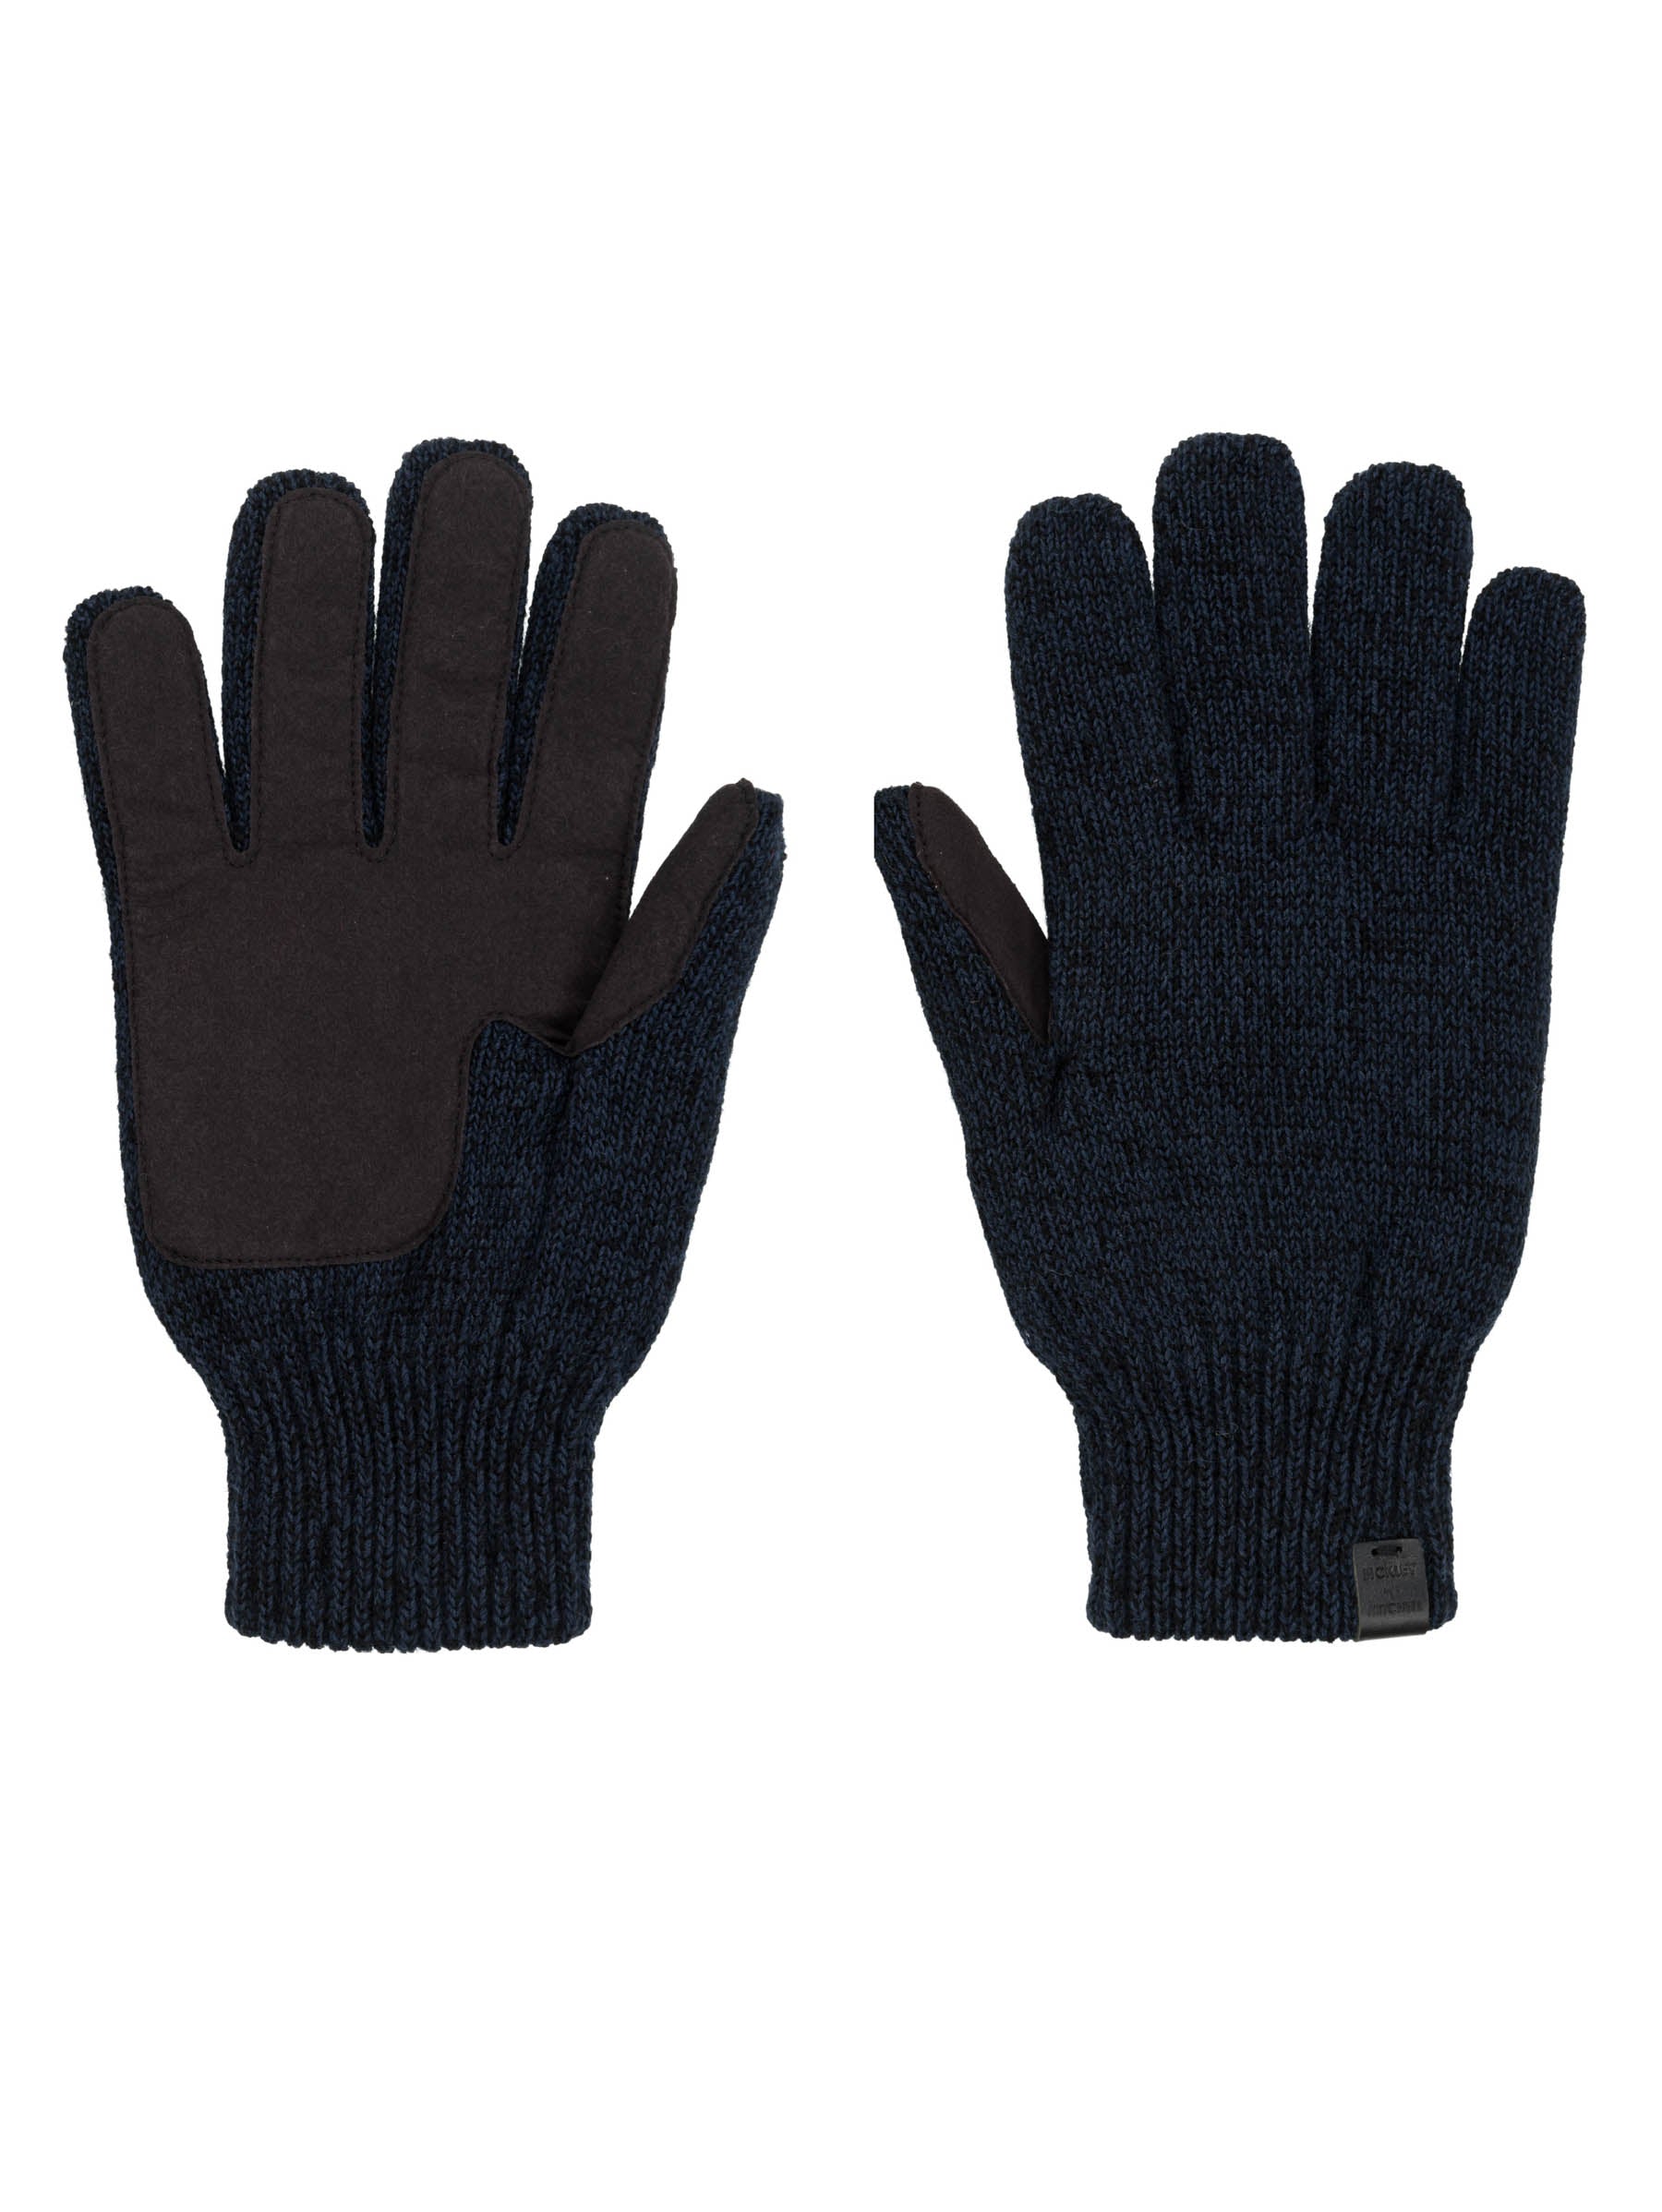 Palm Patch Gloves